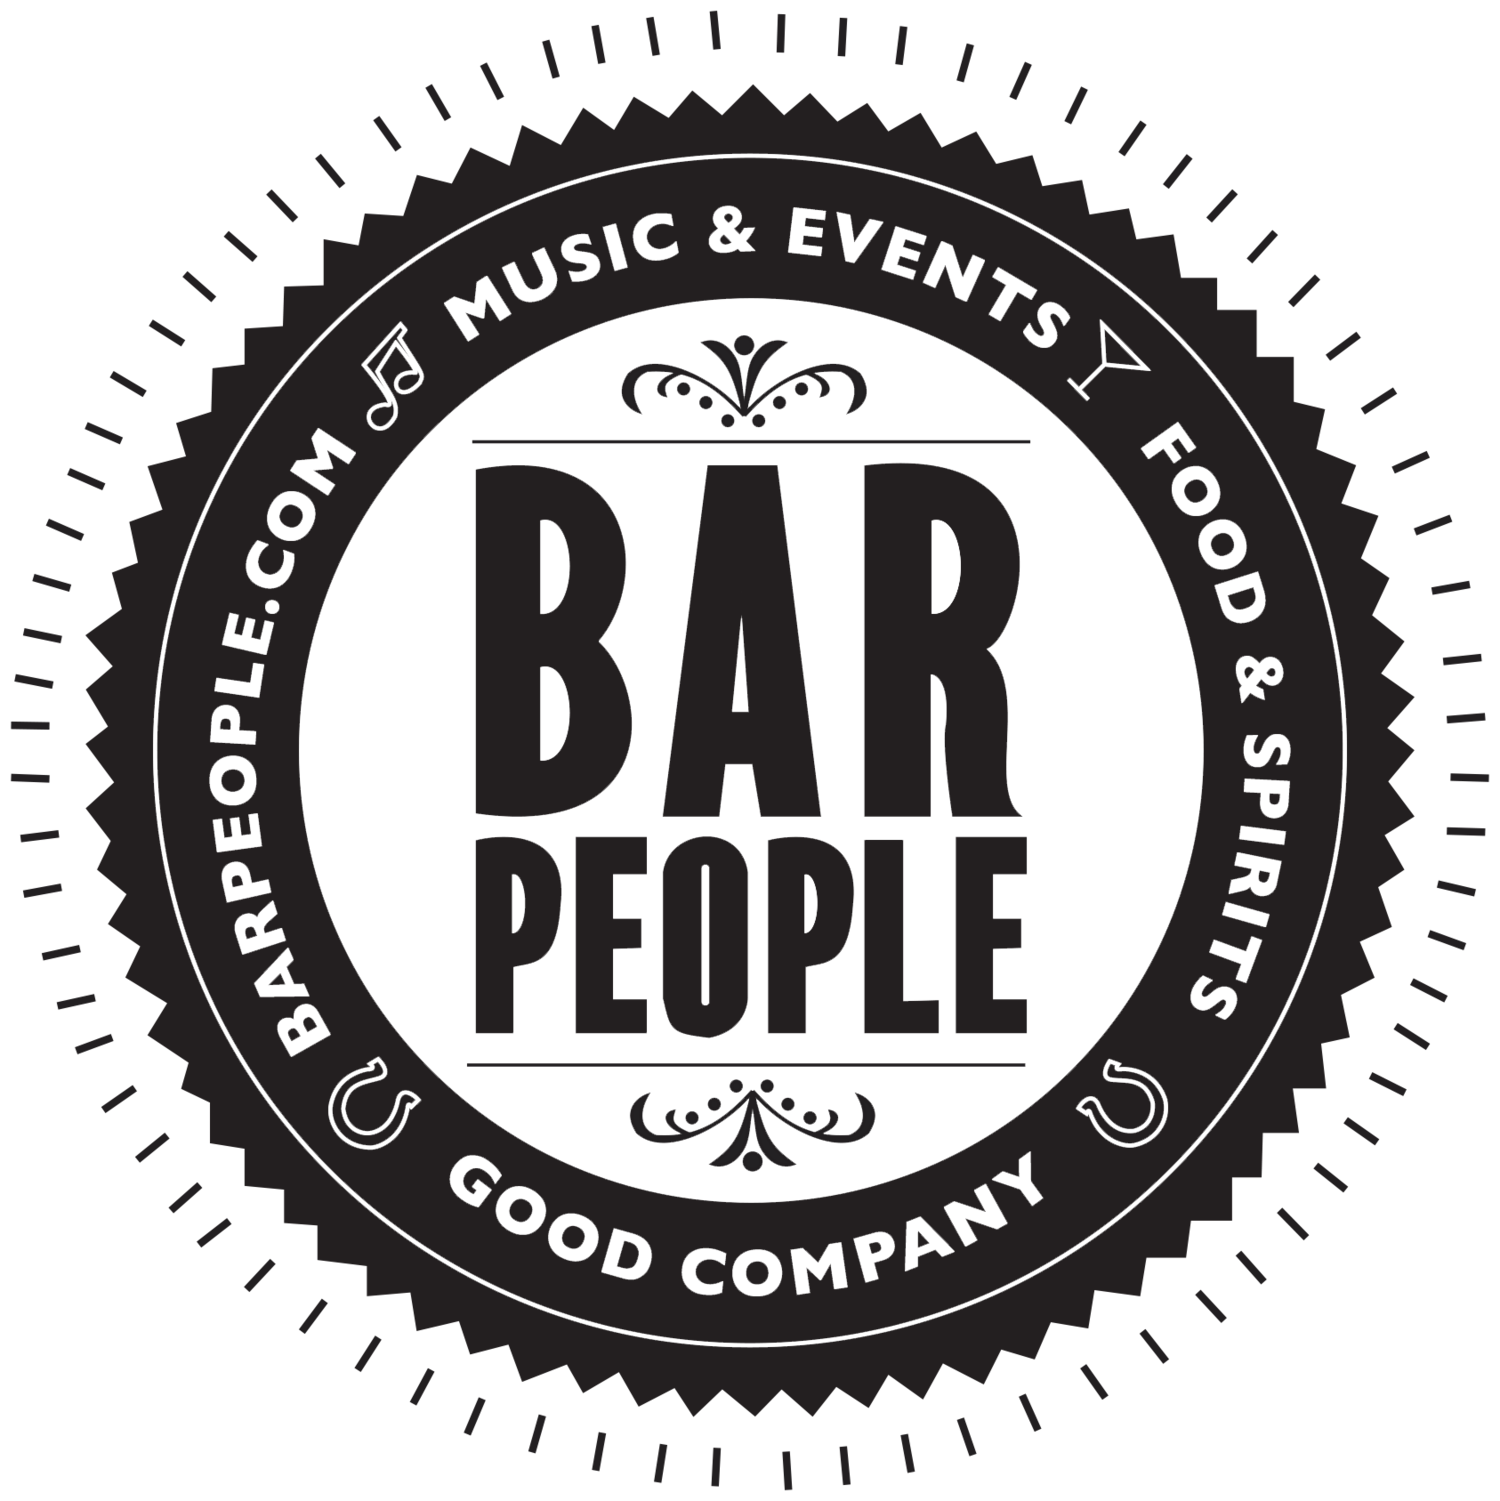 Bar People